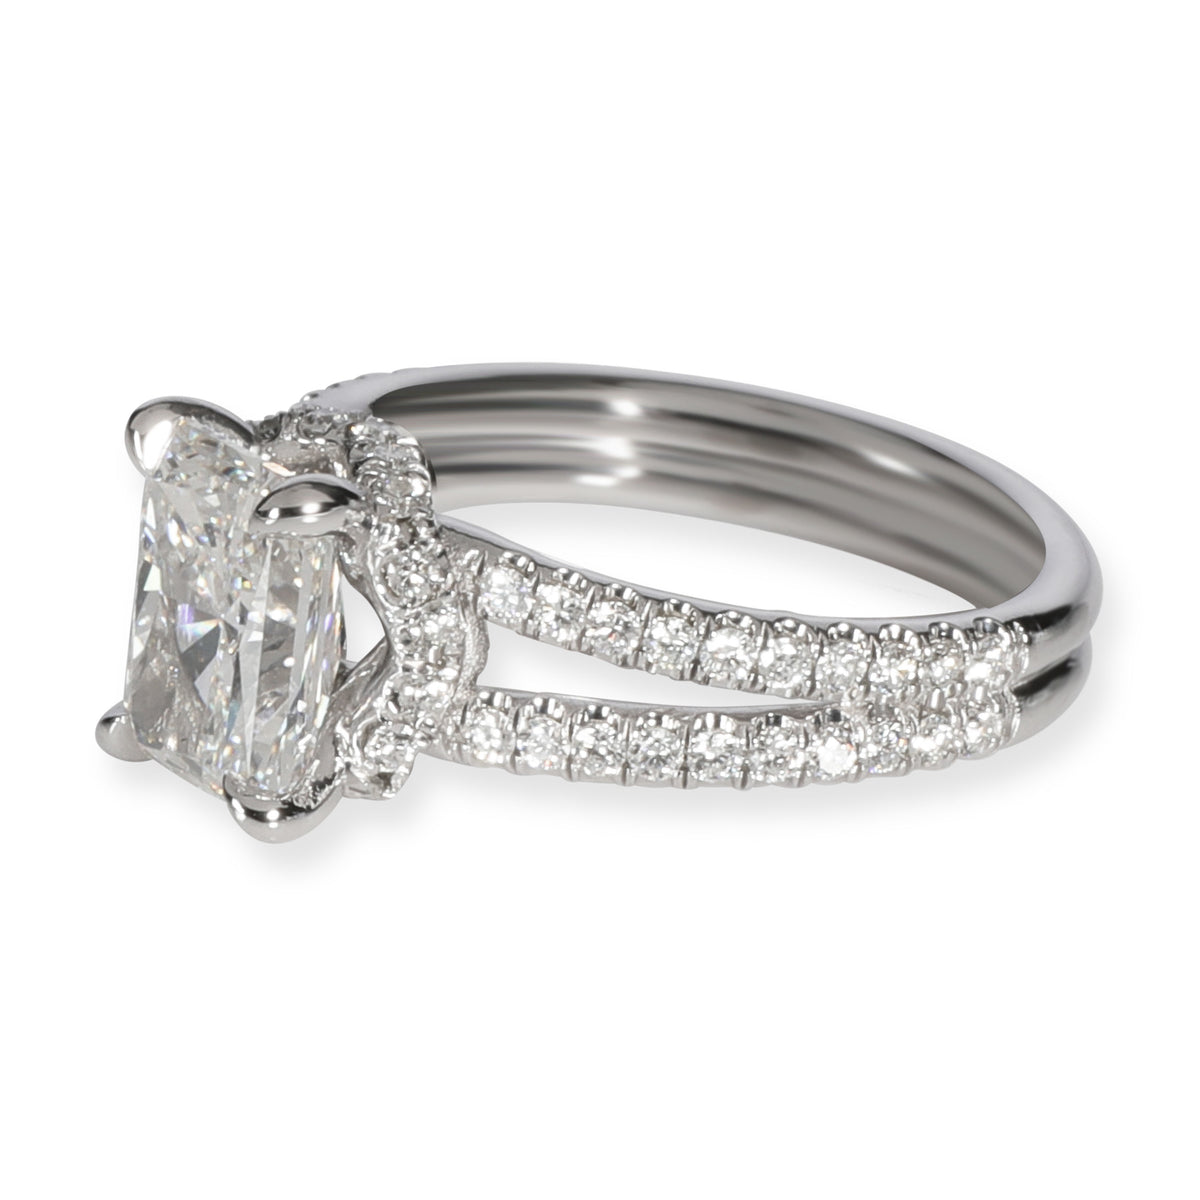 James Allen GIA Radiant Diamond Engagement Ring in  Platinum I VS1 2.14 CTW